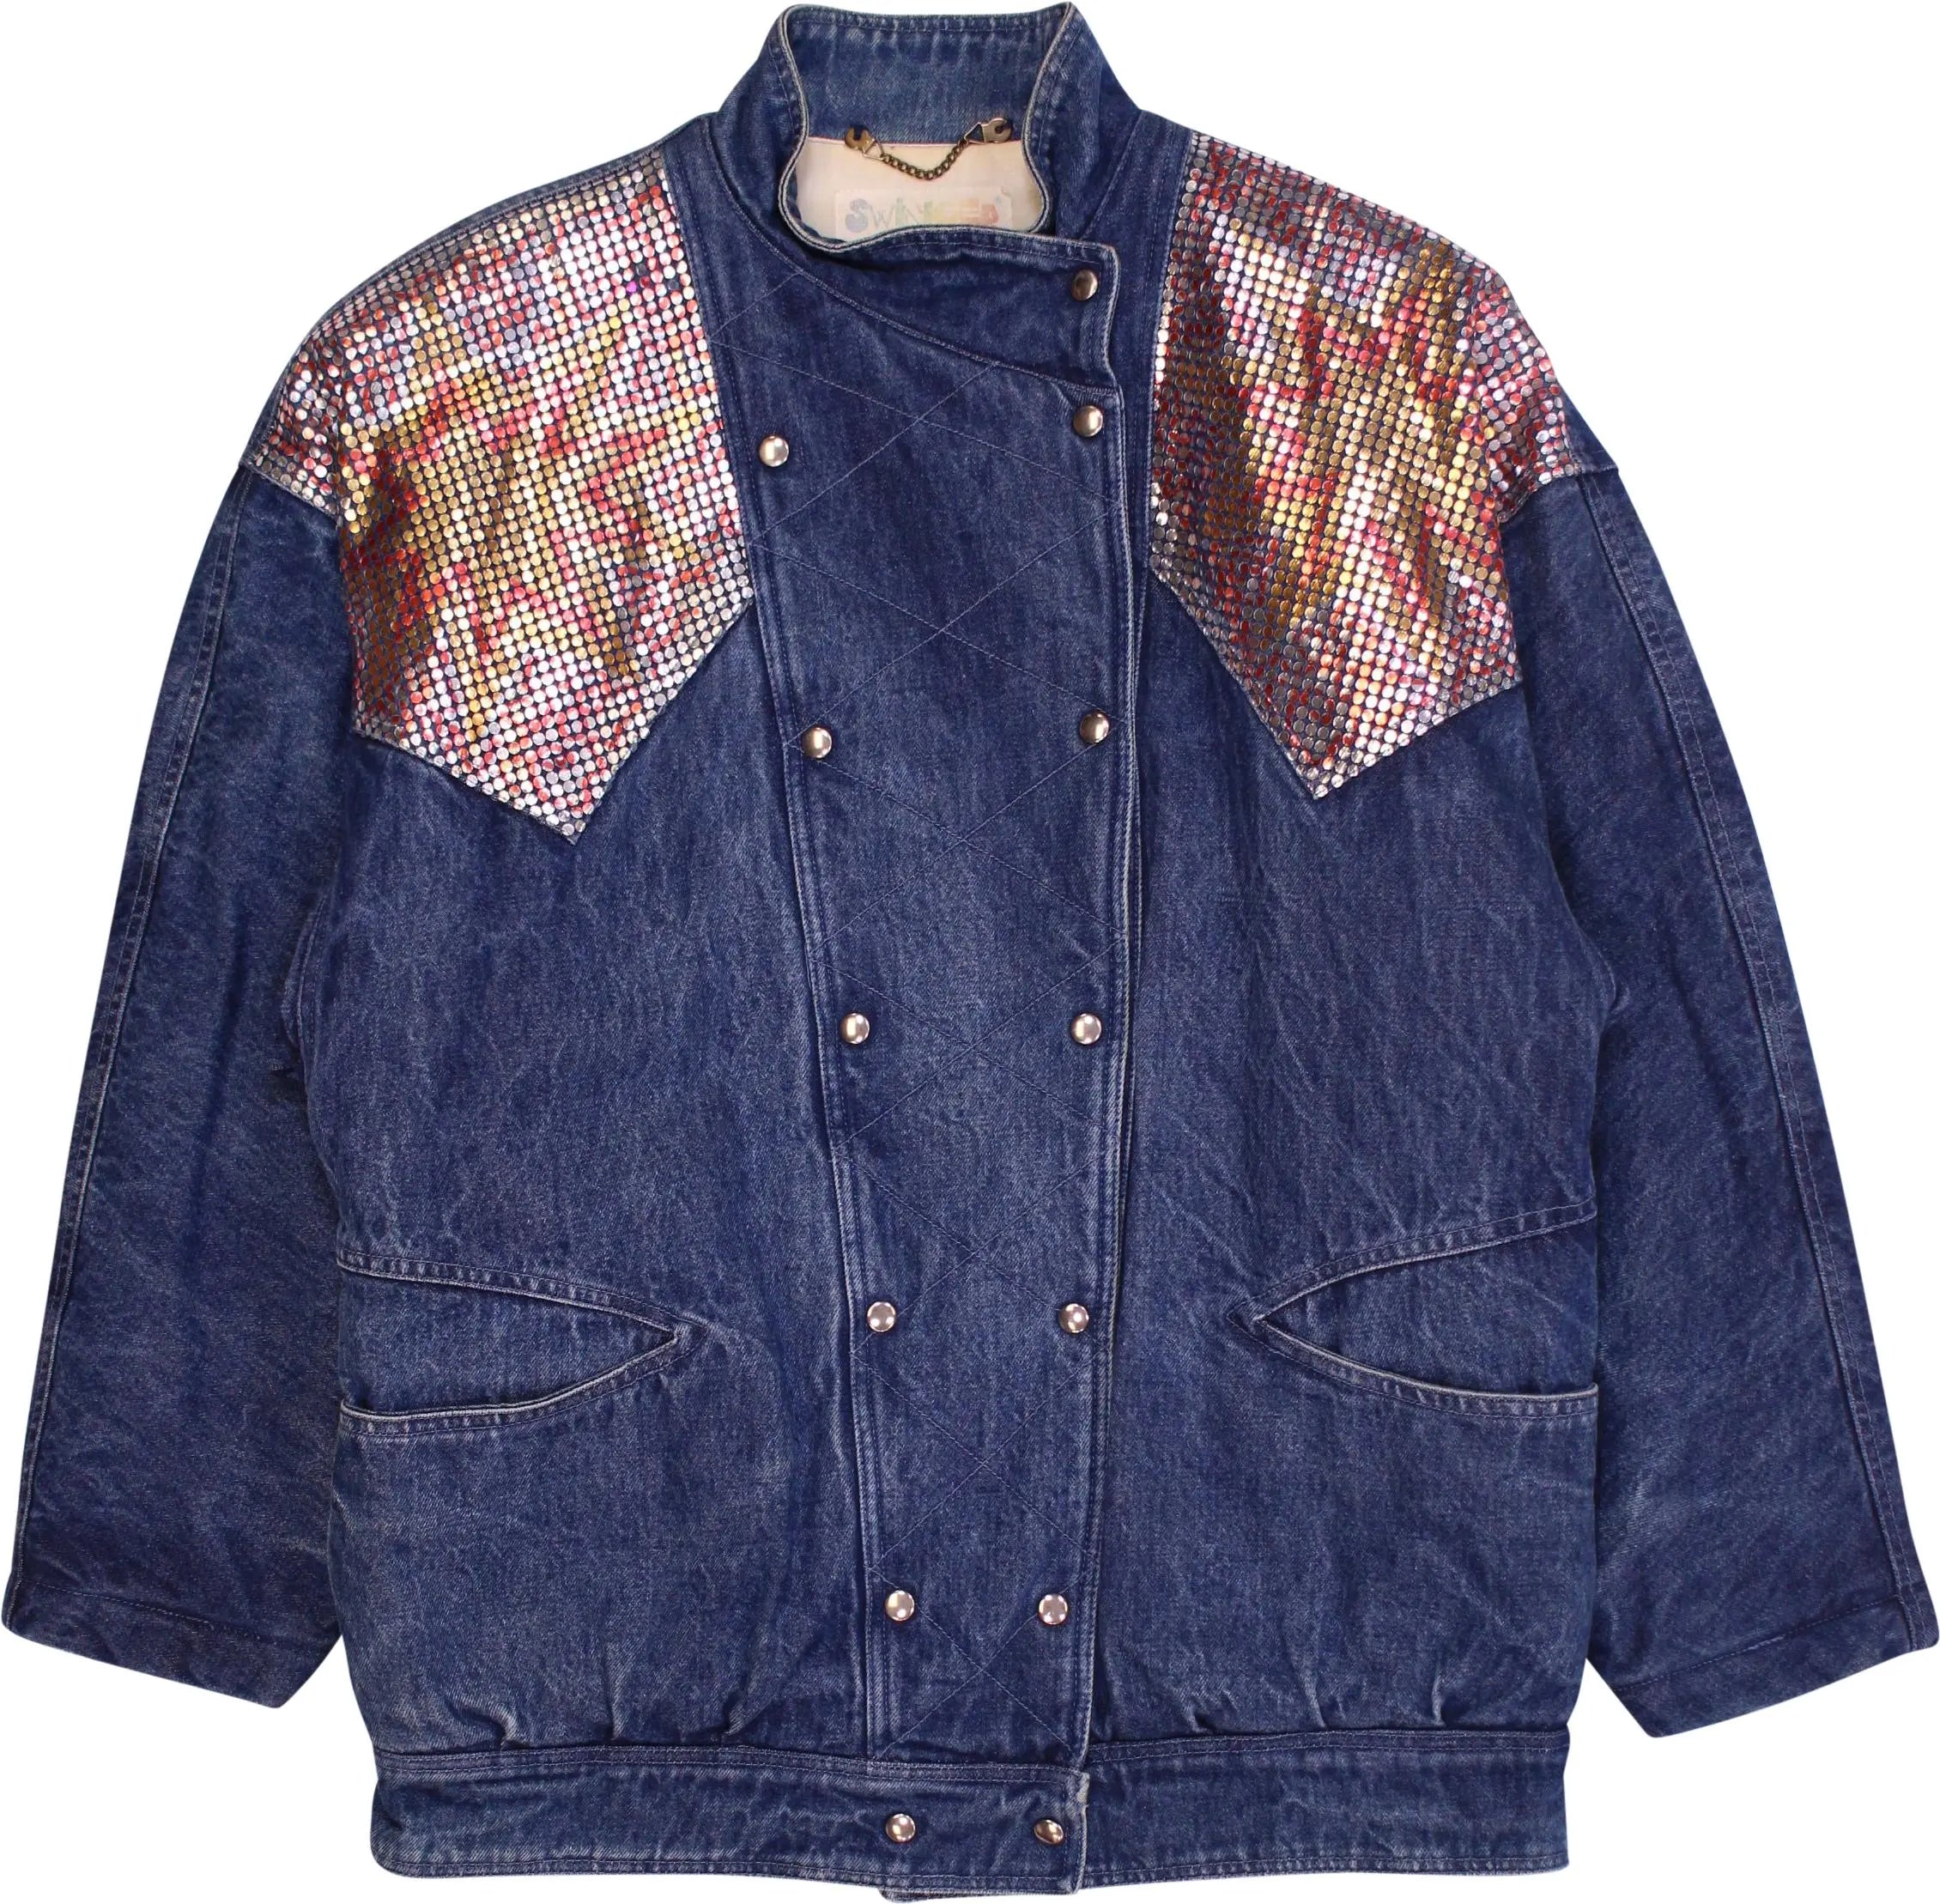 Swinger - 80s Denim Jacket with Stars of Glitter on Shoulder- ThriftTale.com - Vintage and second handclothing